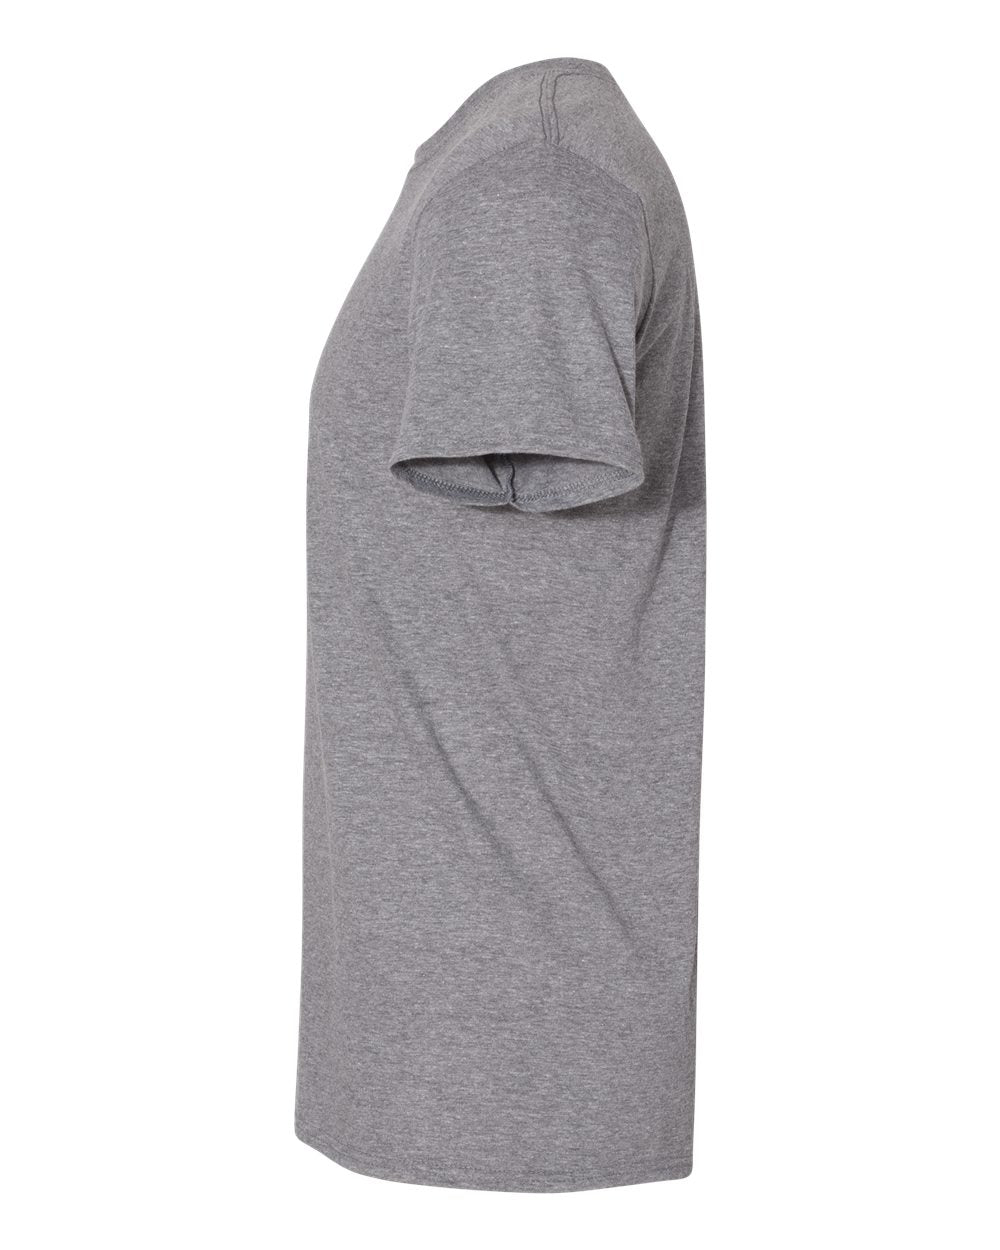 Unisex Gildan Short Sleeve - SoftstyleT-Shirt